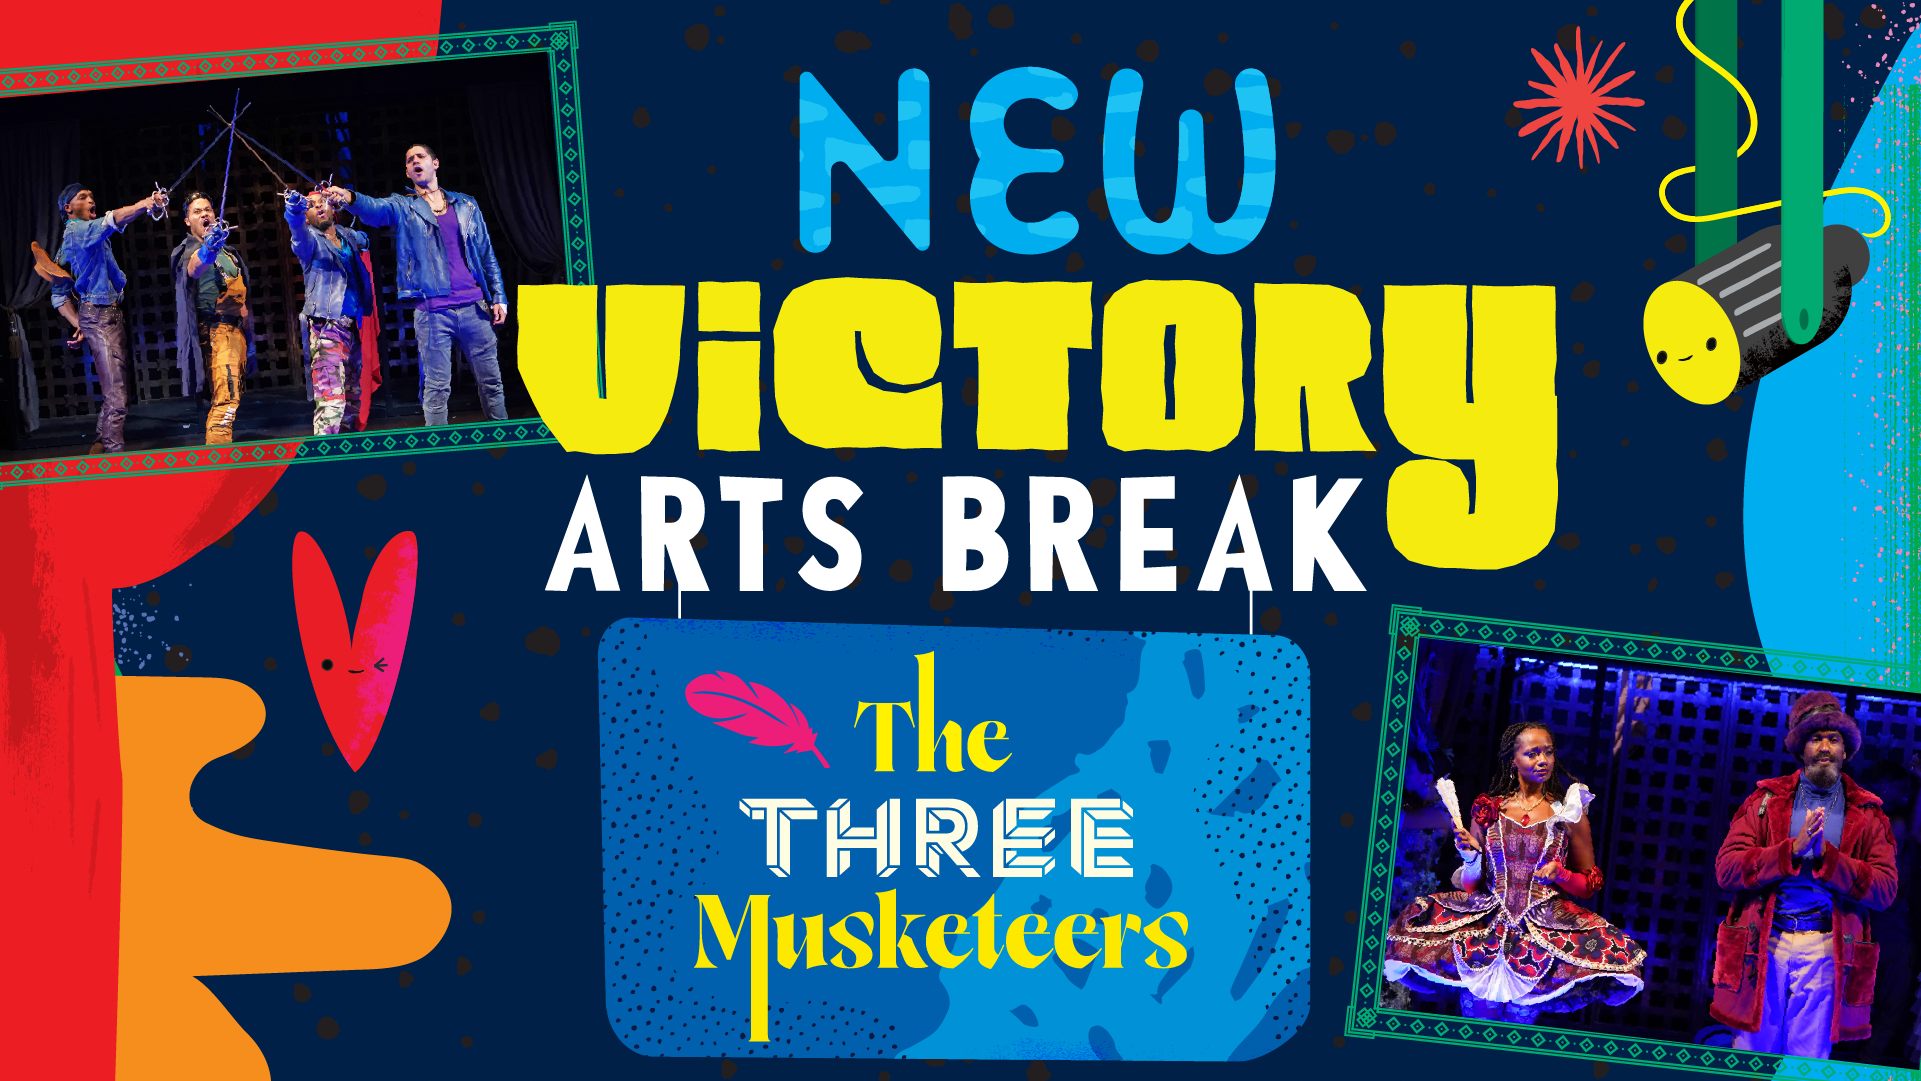 New Victory Arts Break: The Three Musketeers